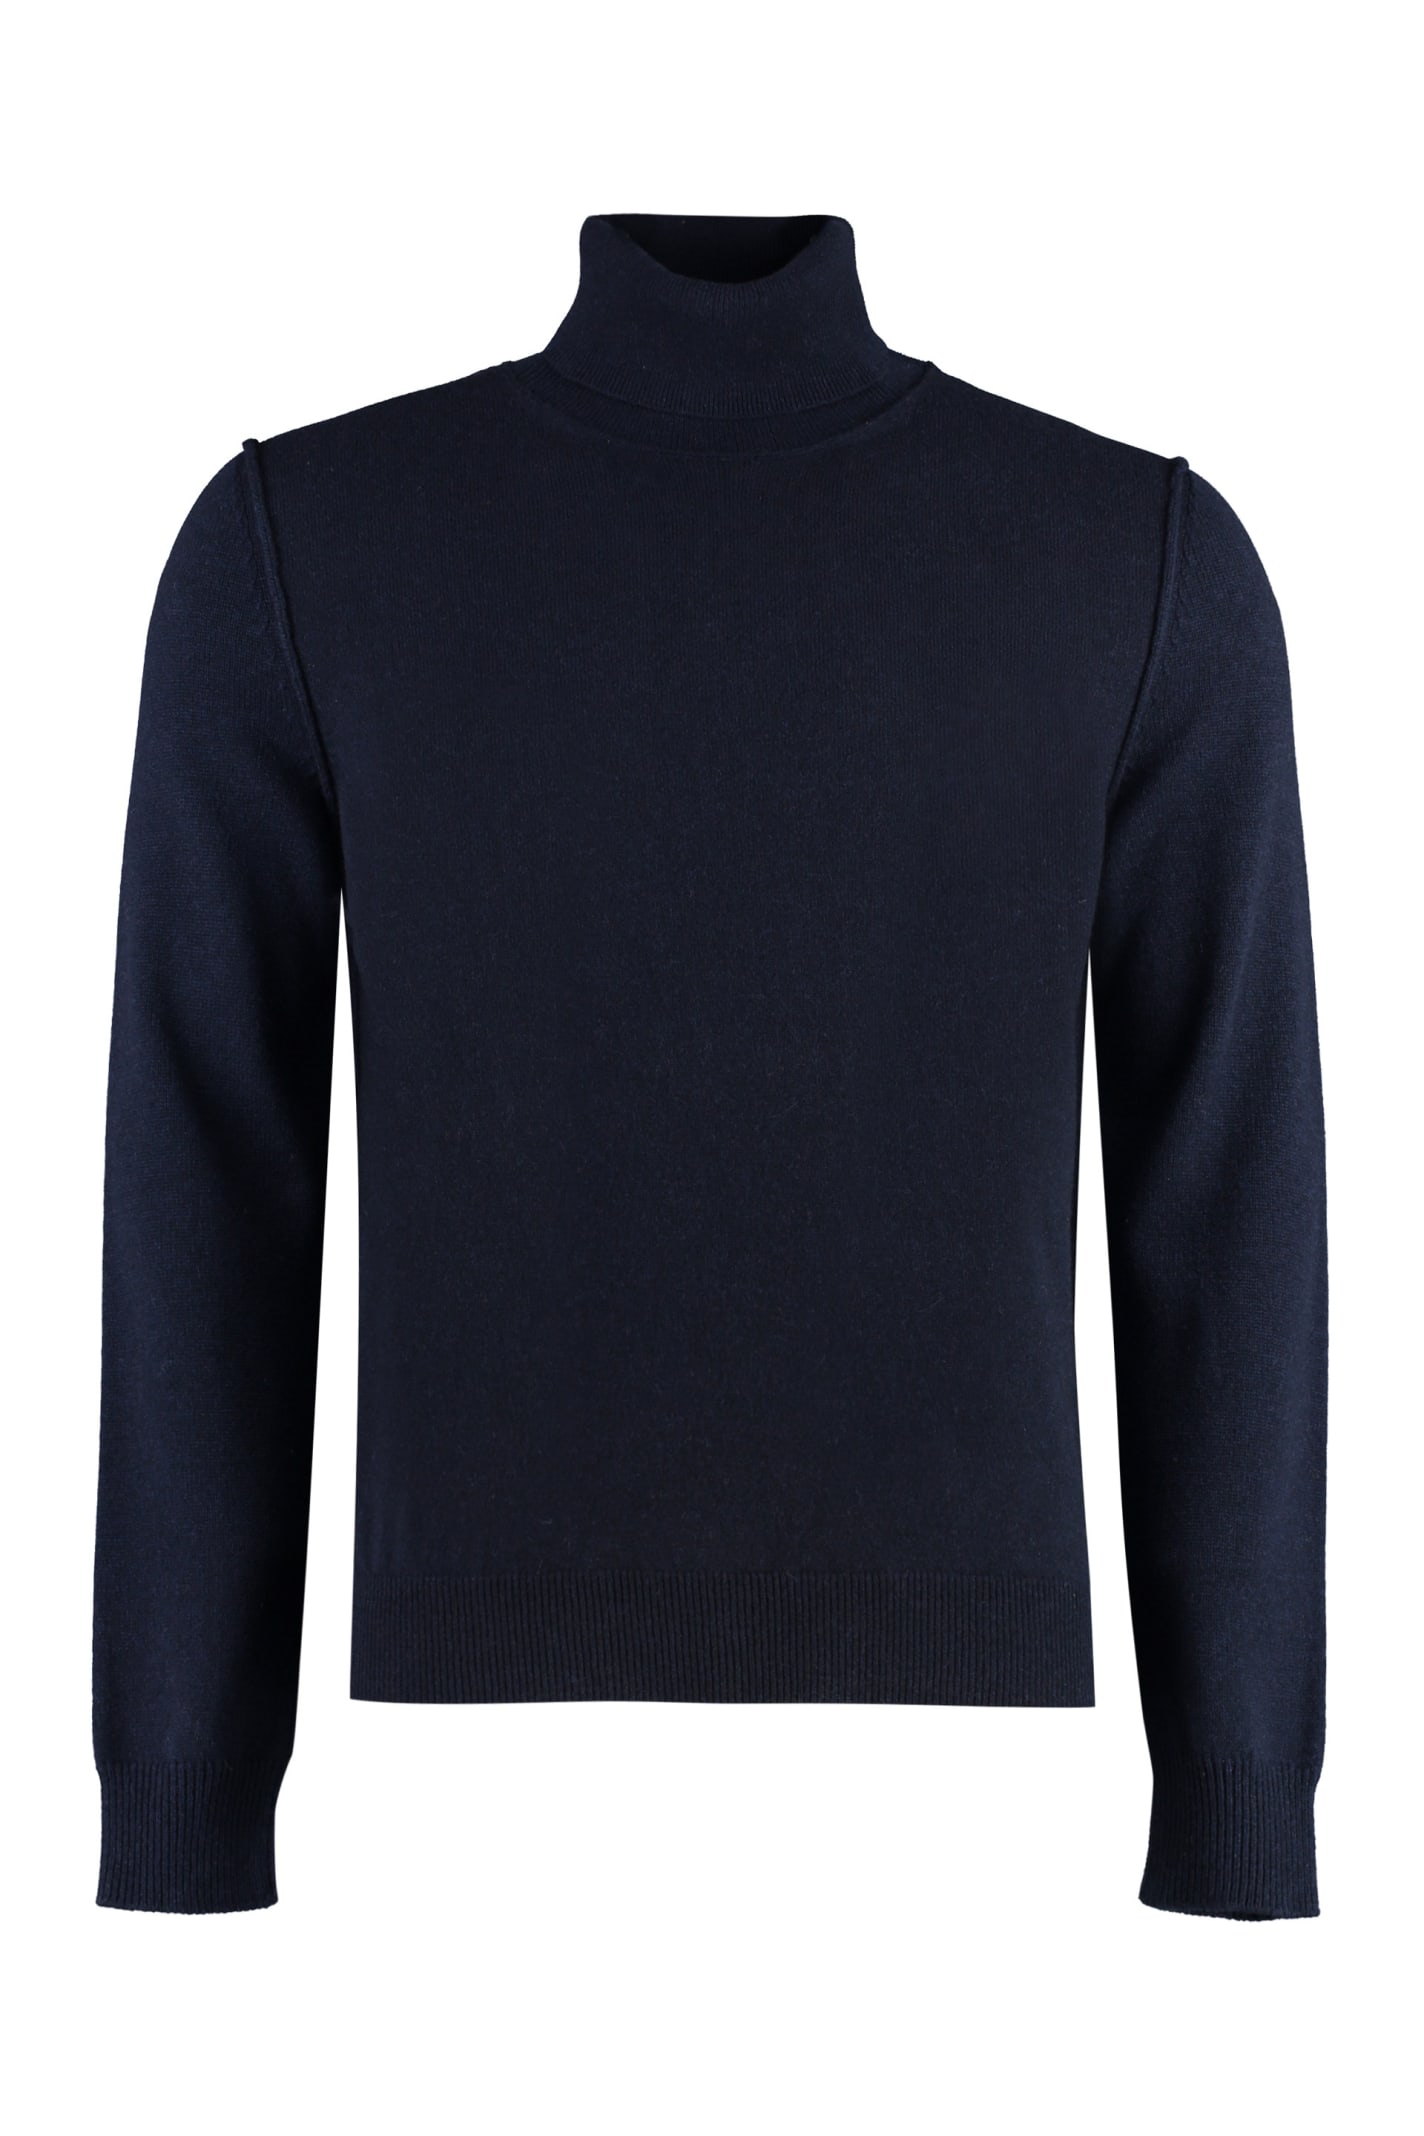 Maison Margiela Cashmere Turtleneck Sweater In Black